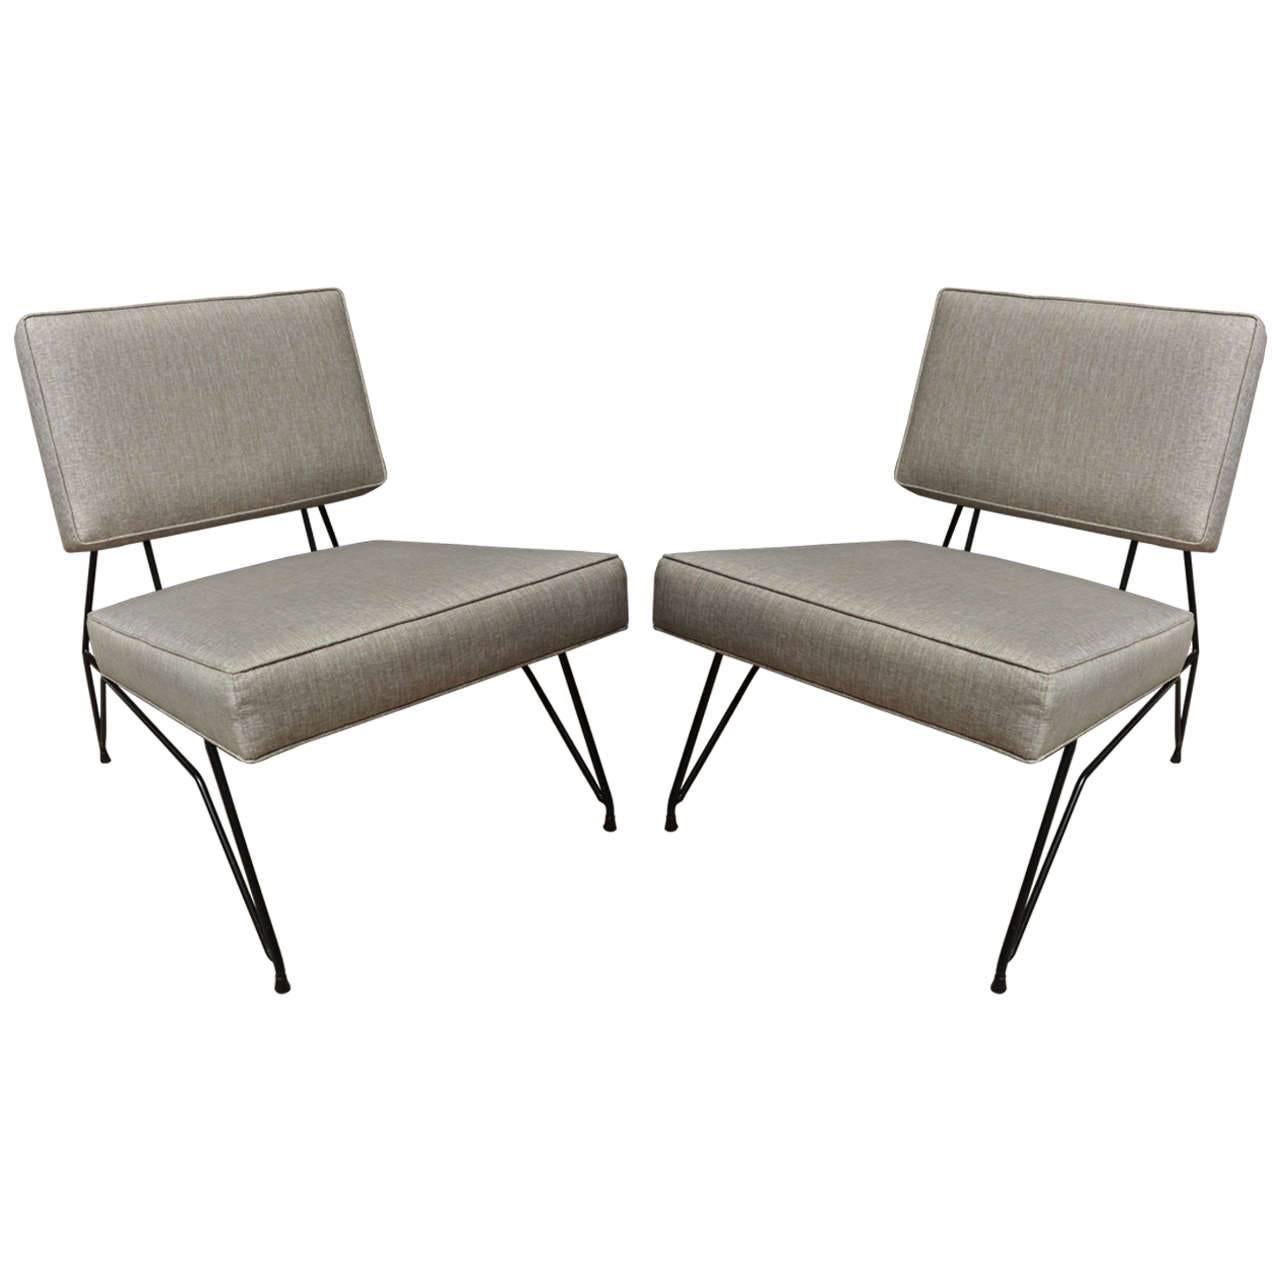 Pair of Italian Design Iron Base Upholstered Modernist Chairs